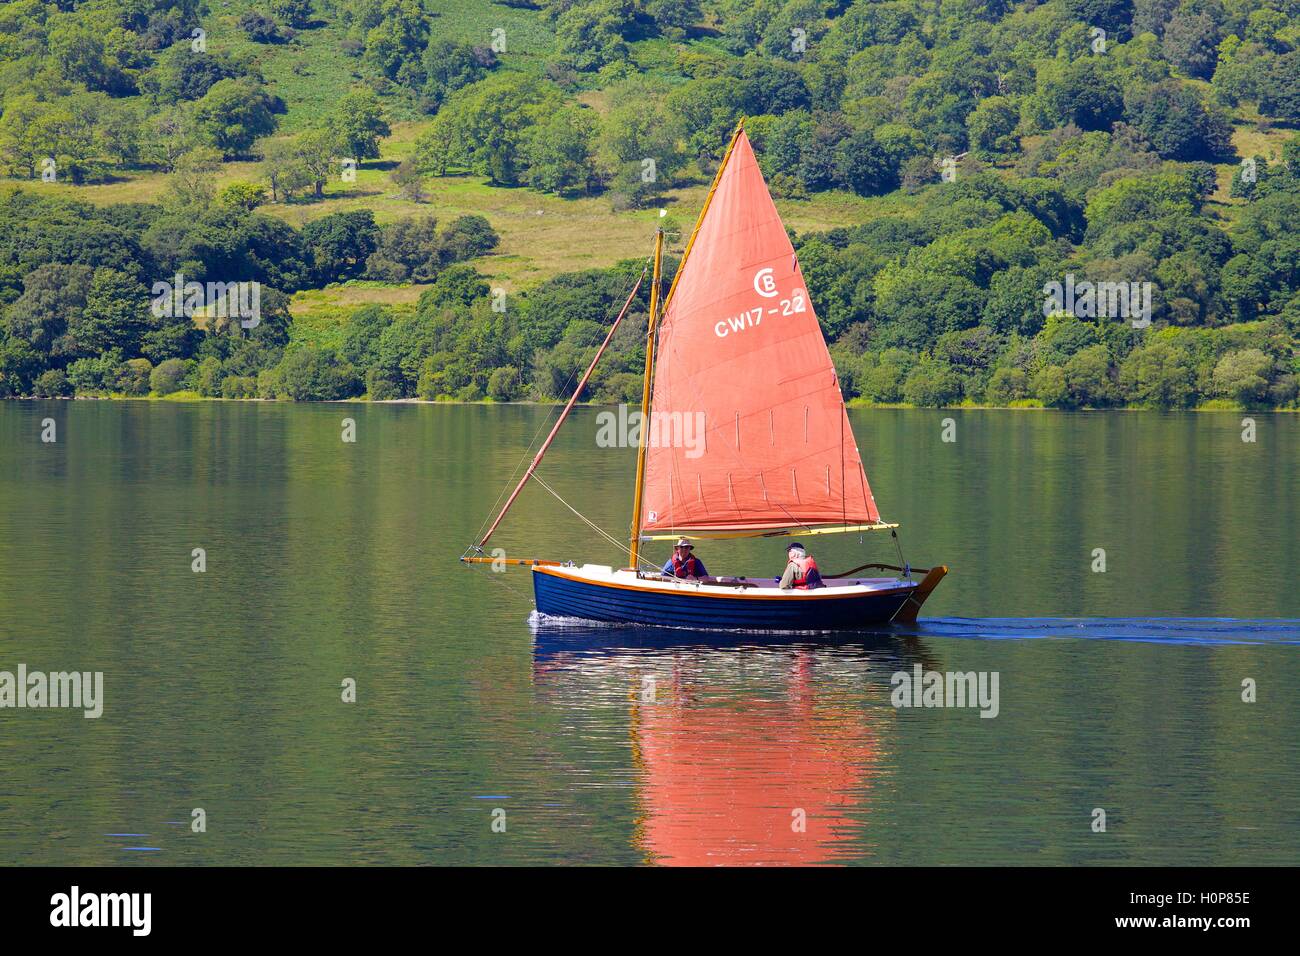 Orange sailed boat sailing near Glencoyne. Ullswater, Penrith, The Lake District National Park, Cumbria, England, United Kingdom Stock Photo